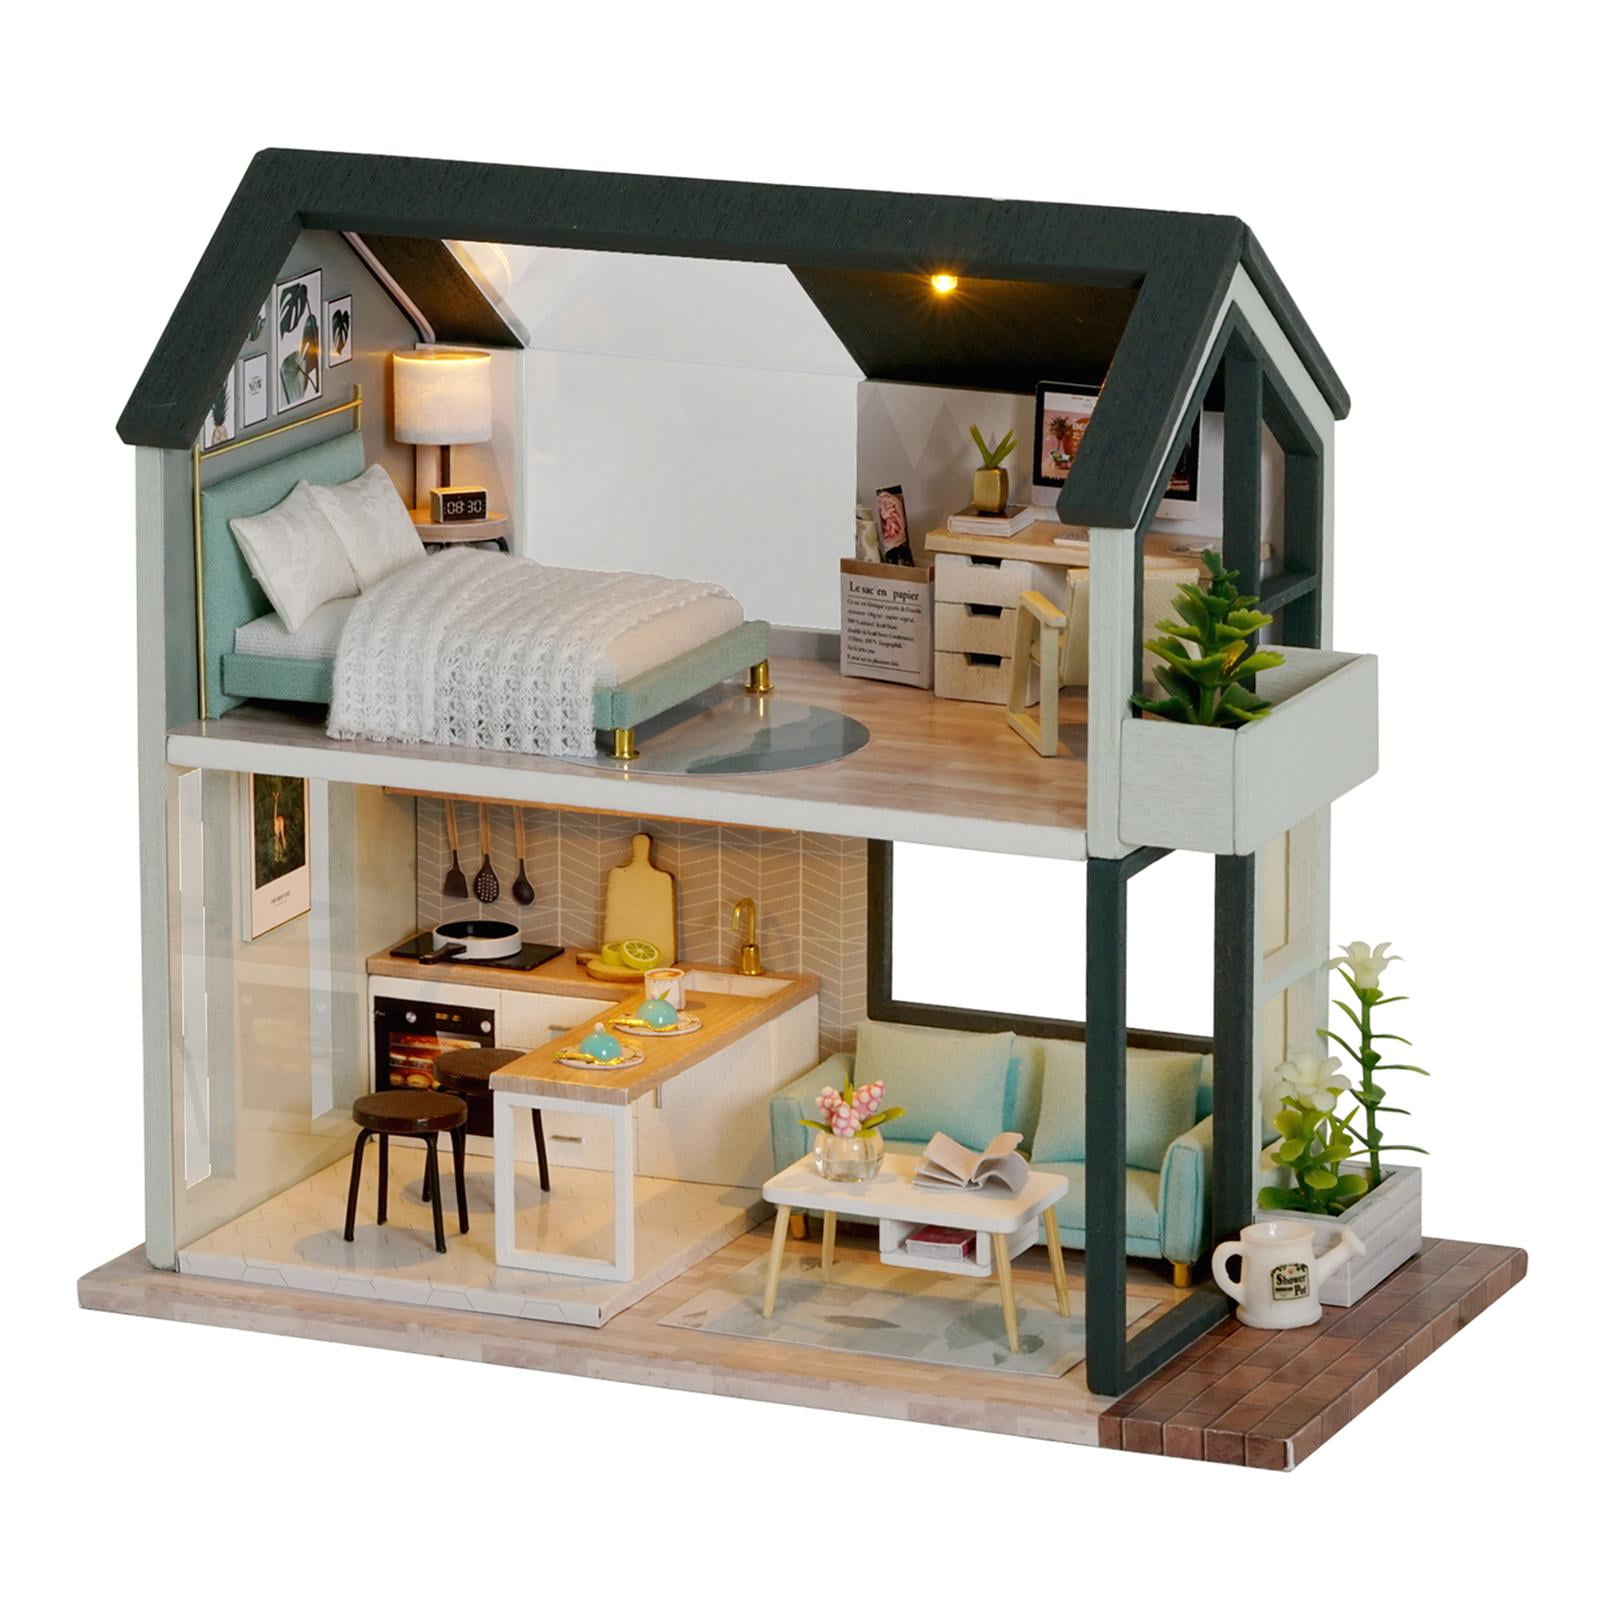 Half Inch Scale, Miniature Appliances, Dollhouse Furniture